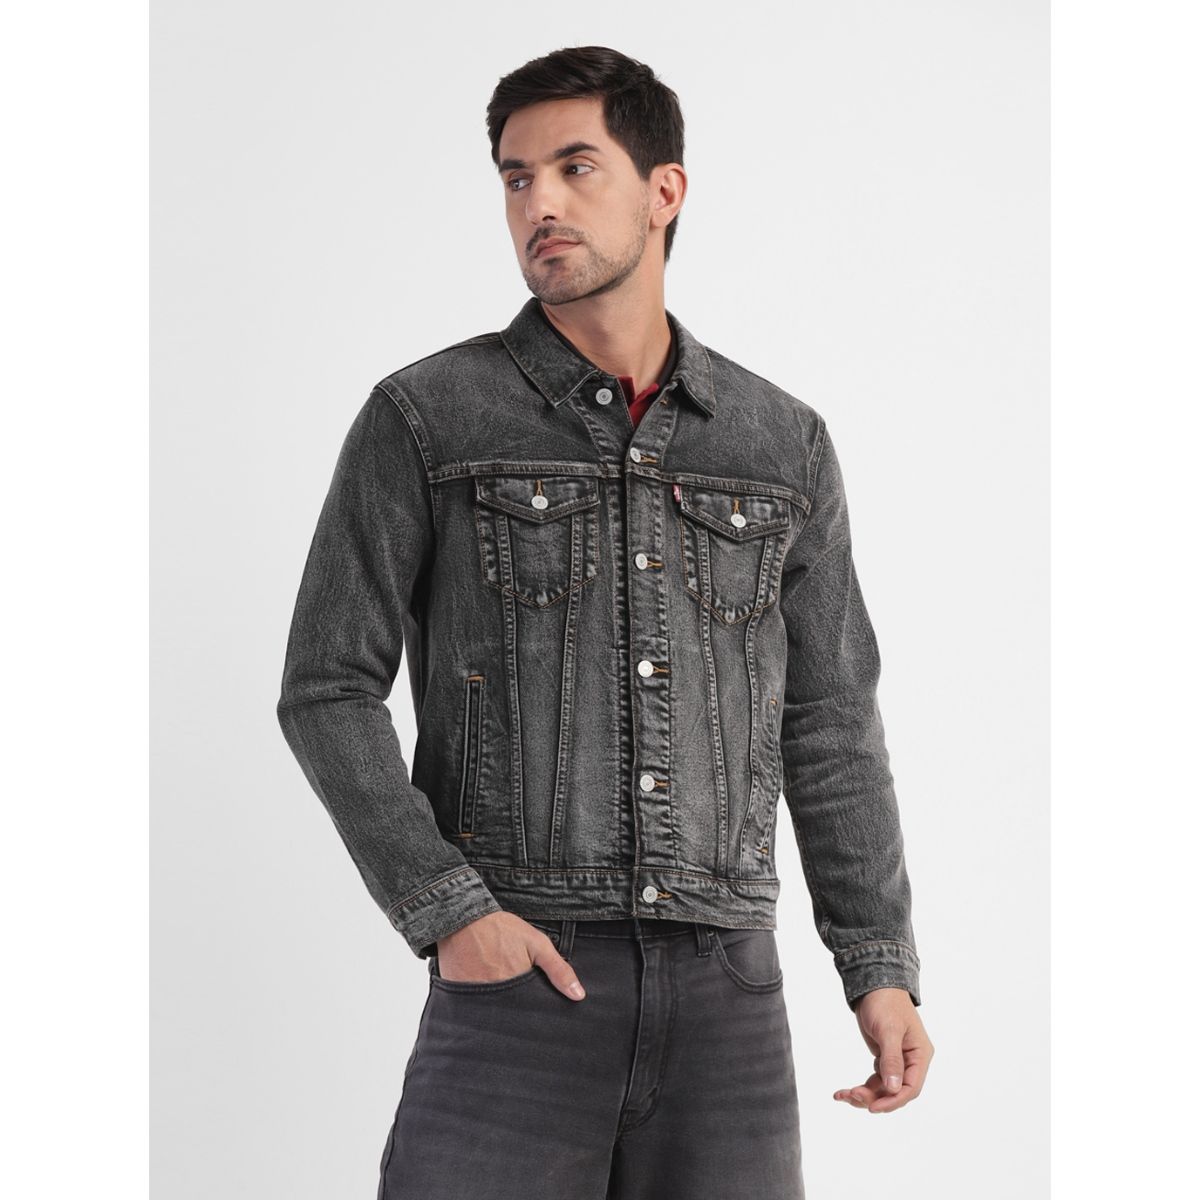 Buy Dark Grey Jackets & Coats for Men by ALTHEORY Online | Ajio.com